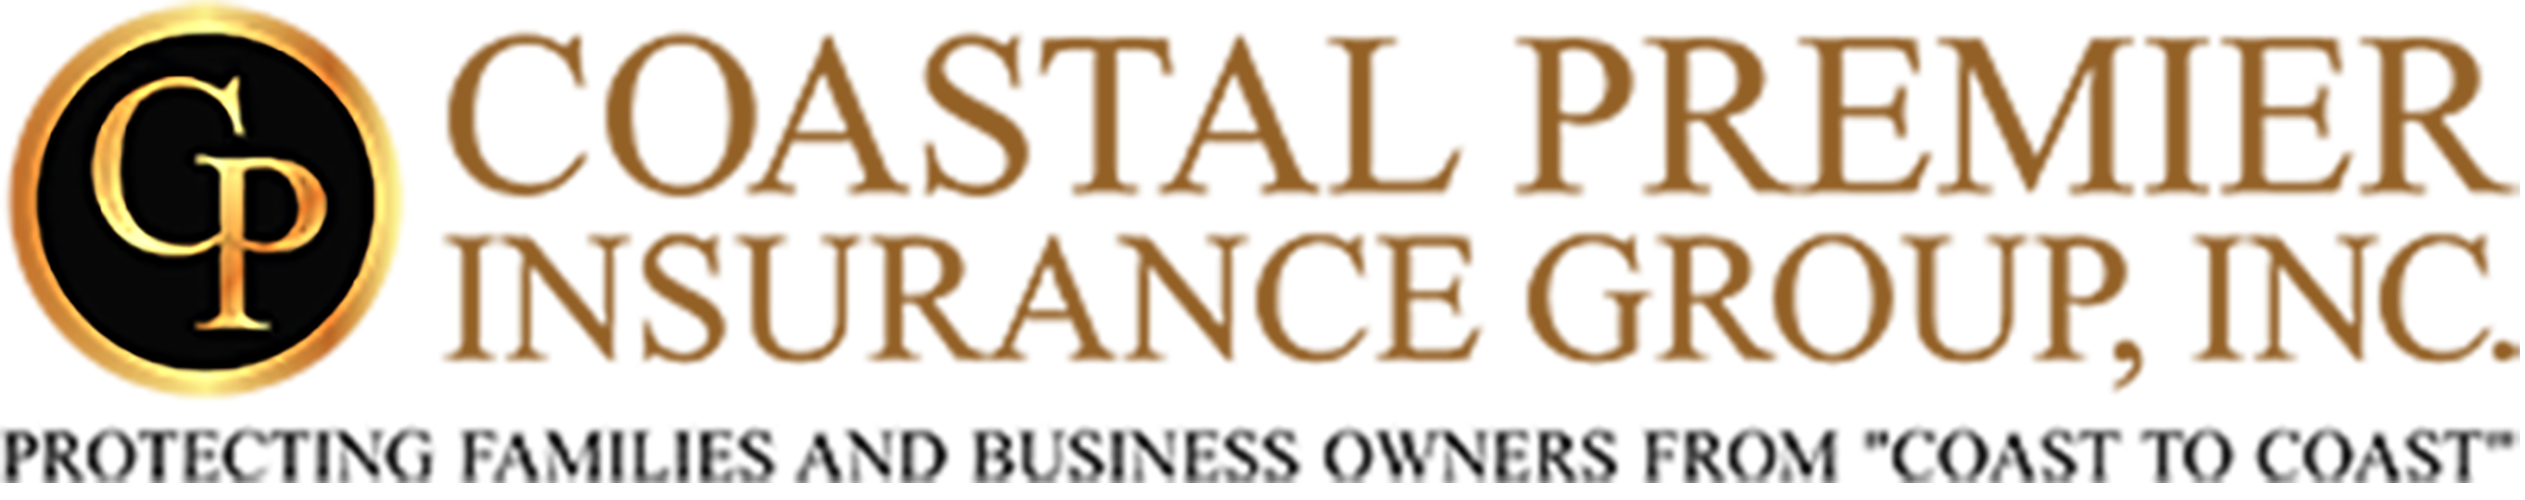 Coastal Premier Insurance Group, Inc.